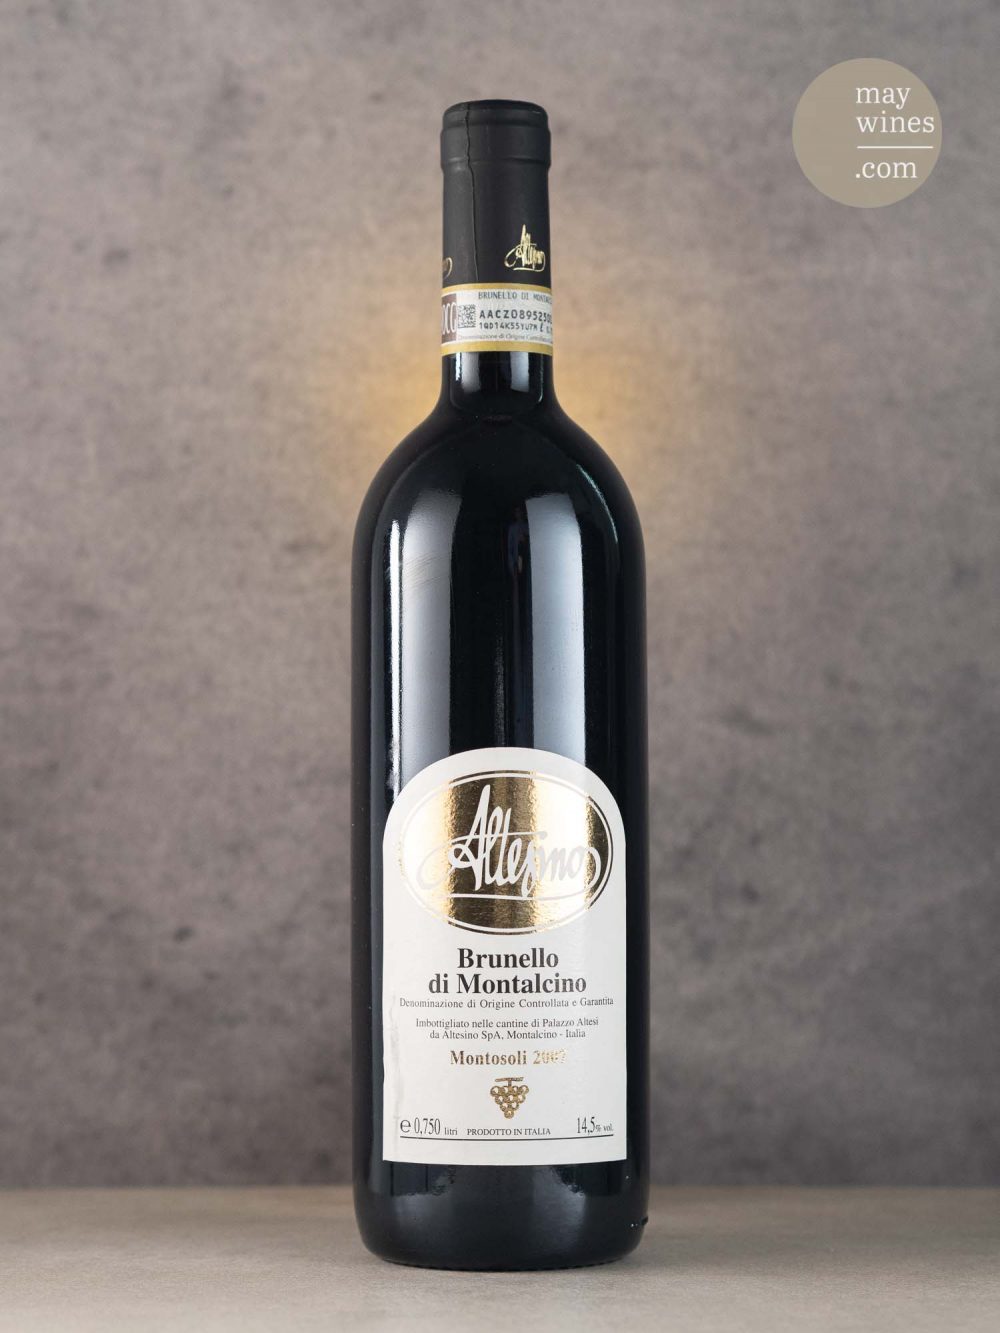 May Wines – Rotwein – 2007 Brunello di Montalcino Montosoli - Altesino